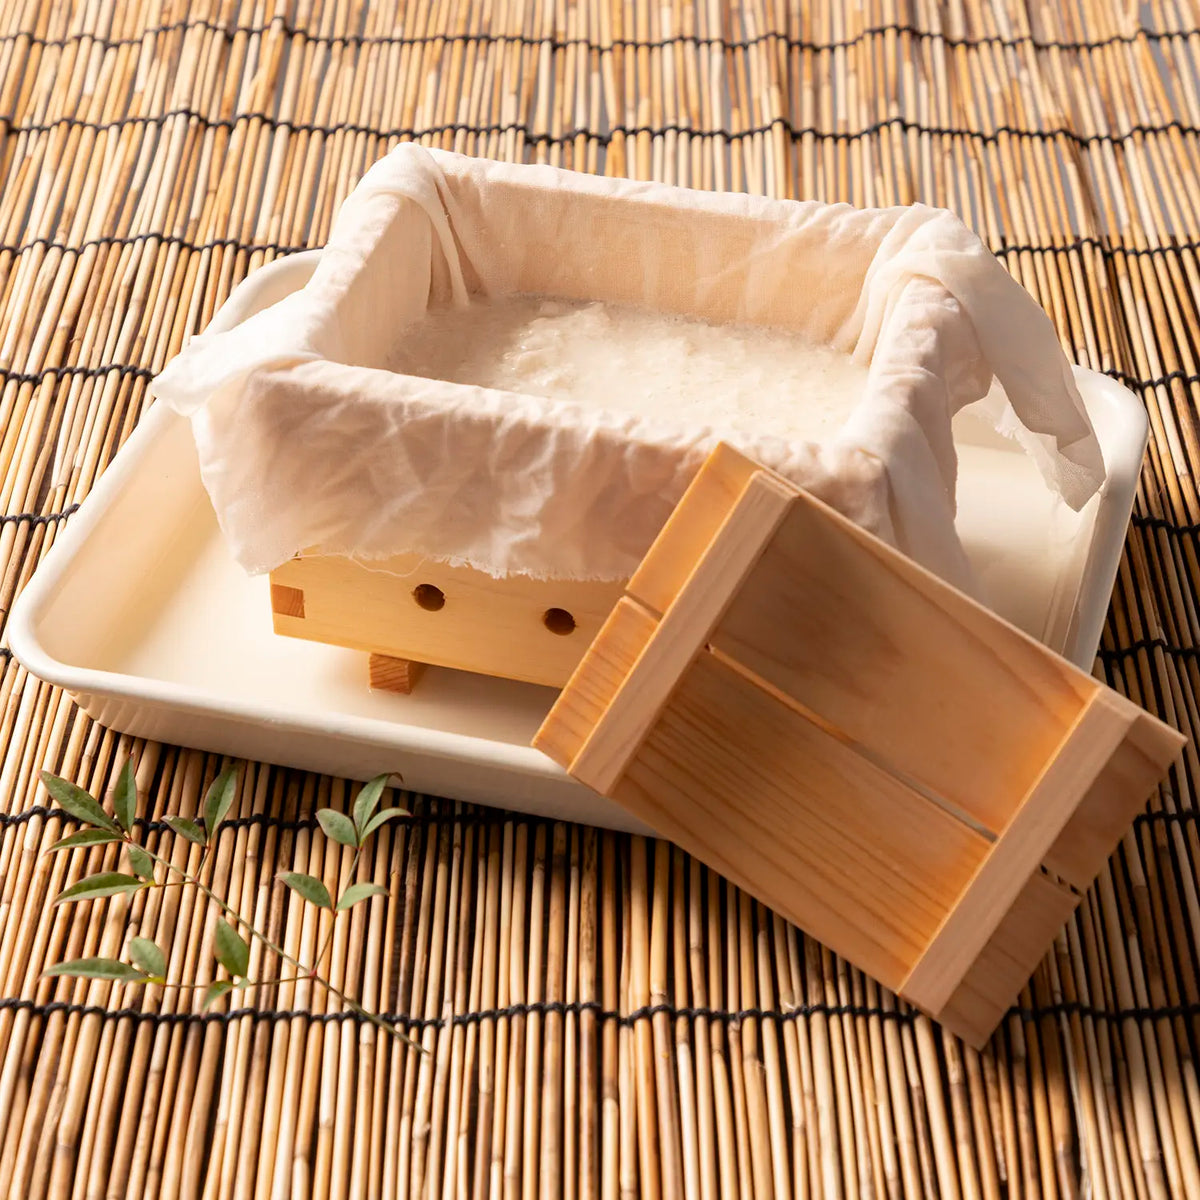 Yamacoh Wooden Tofu Maker Kit